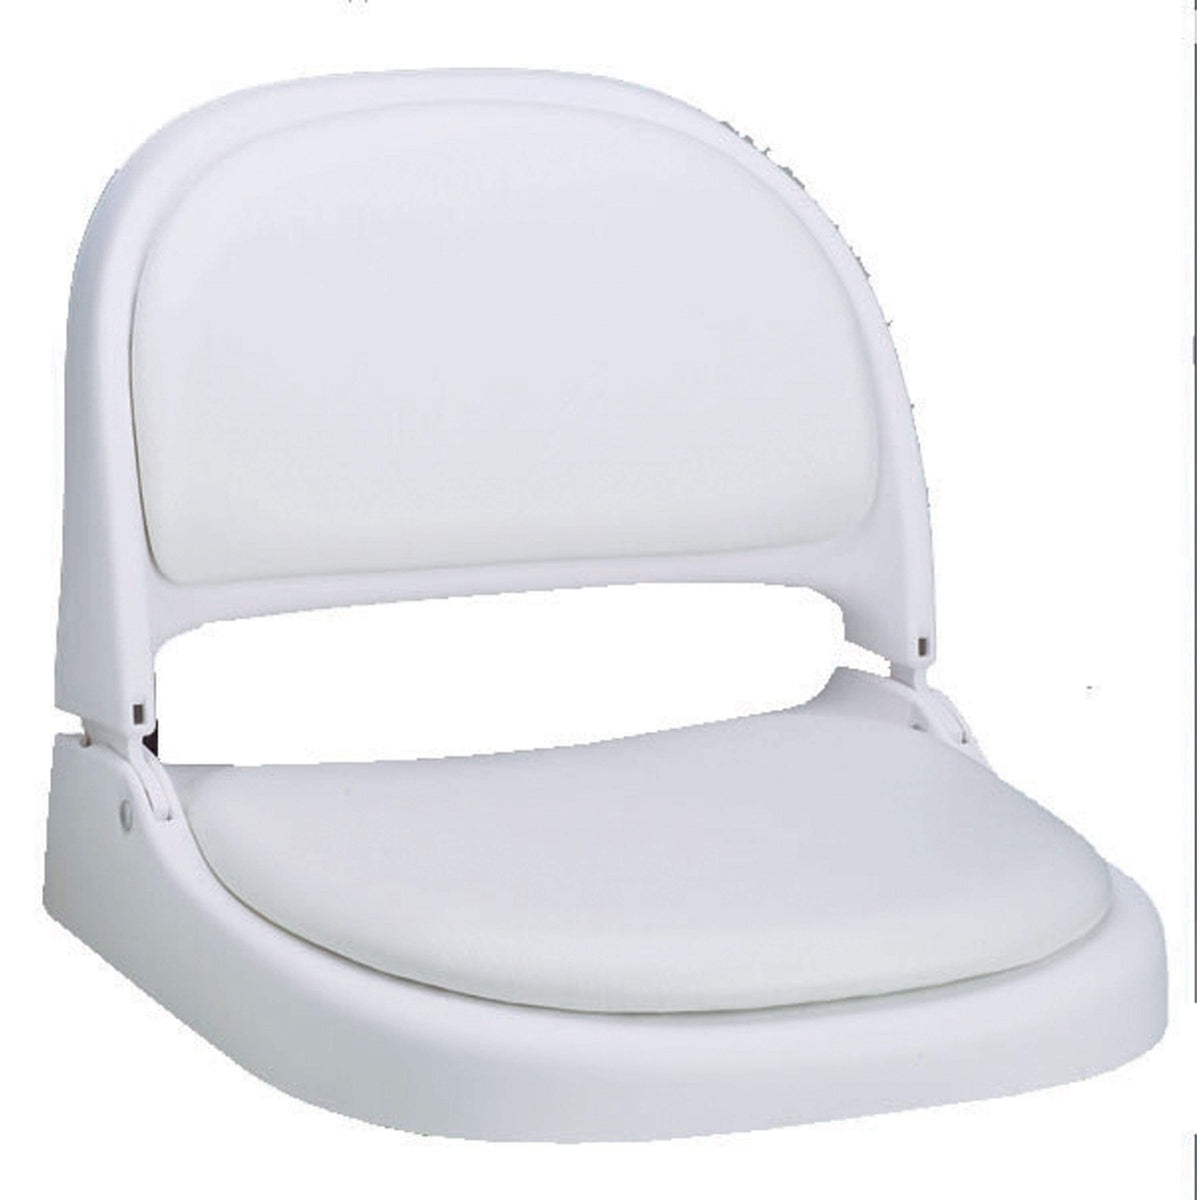 Attwood ProForm Seat White Molded Plastic #7012-101-4